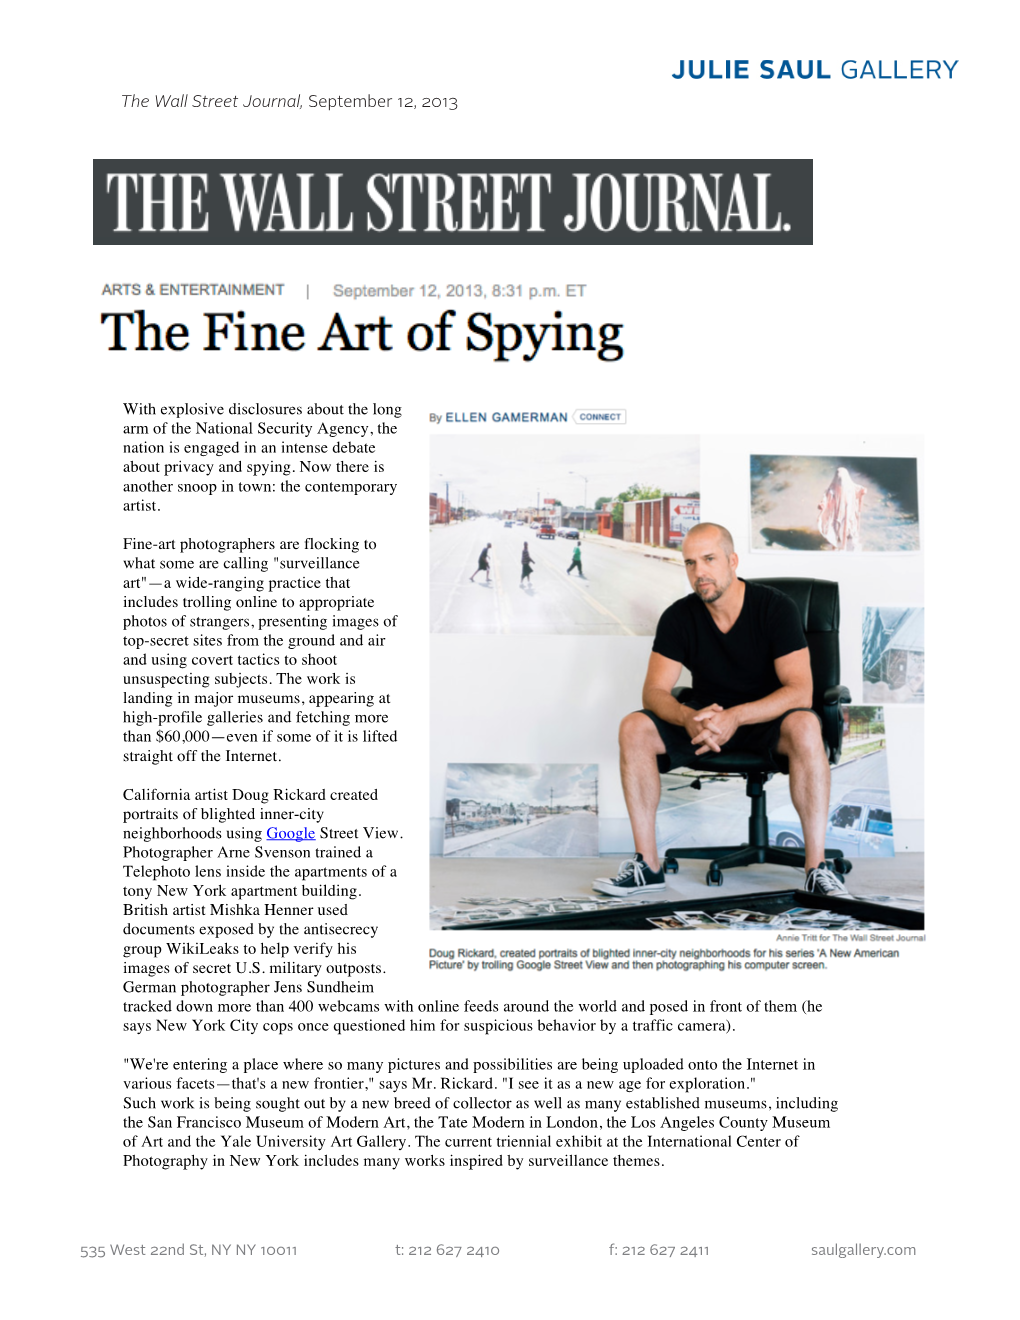 The Wall Street Journal, September 2013